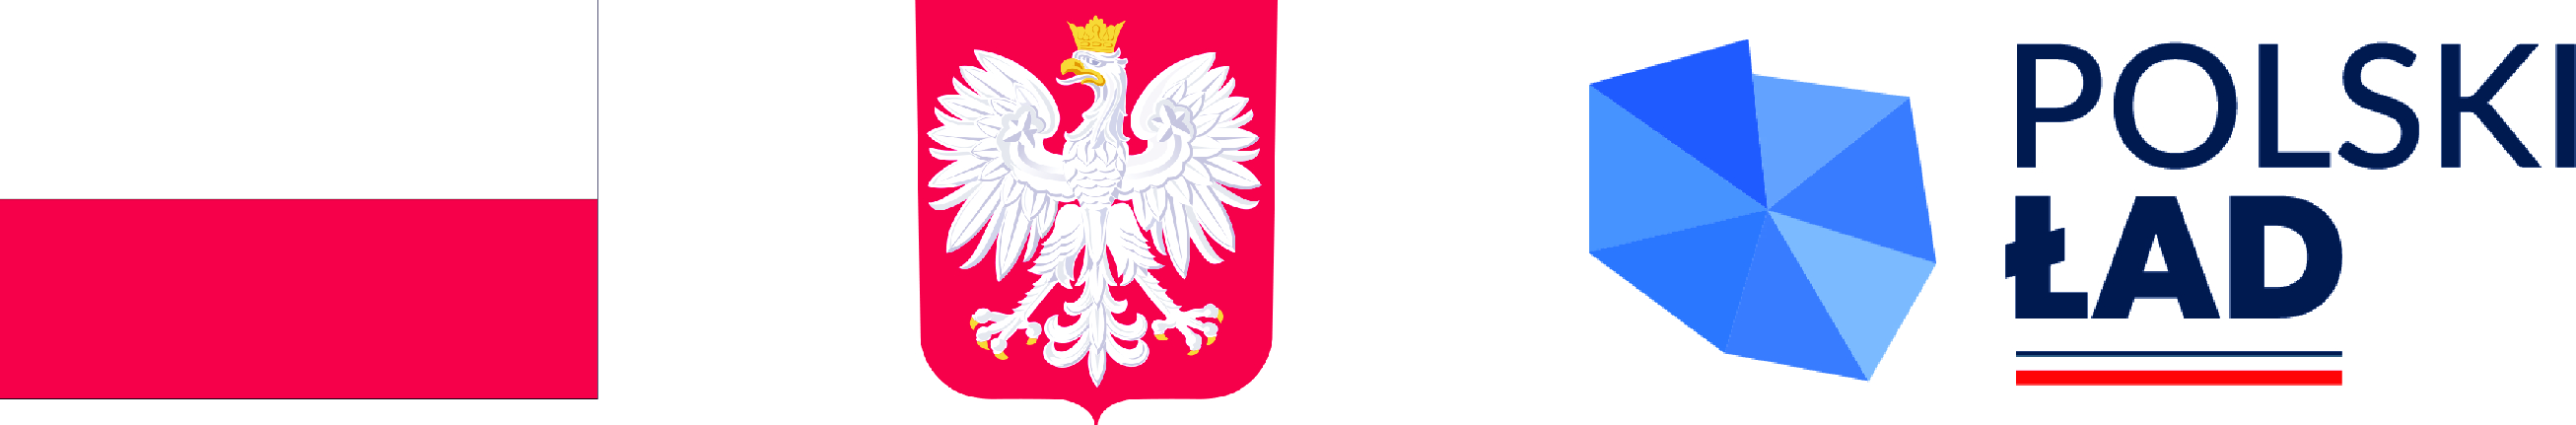 logo_Polski_Ład.jpg